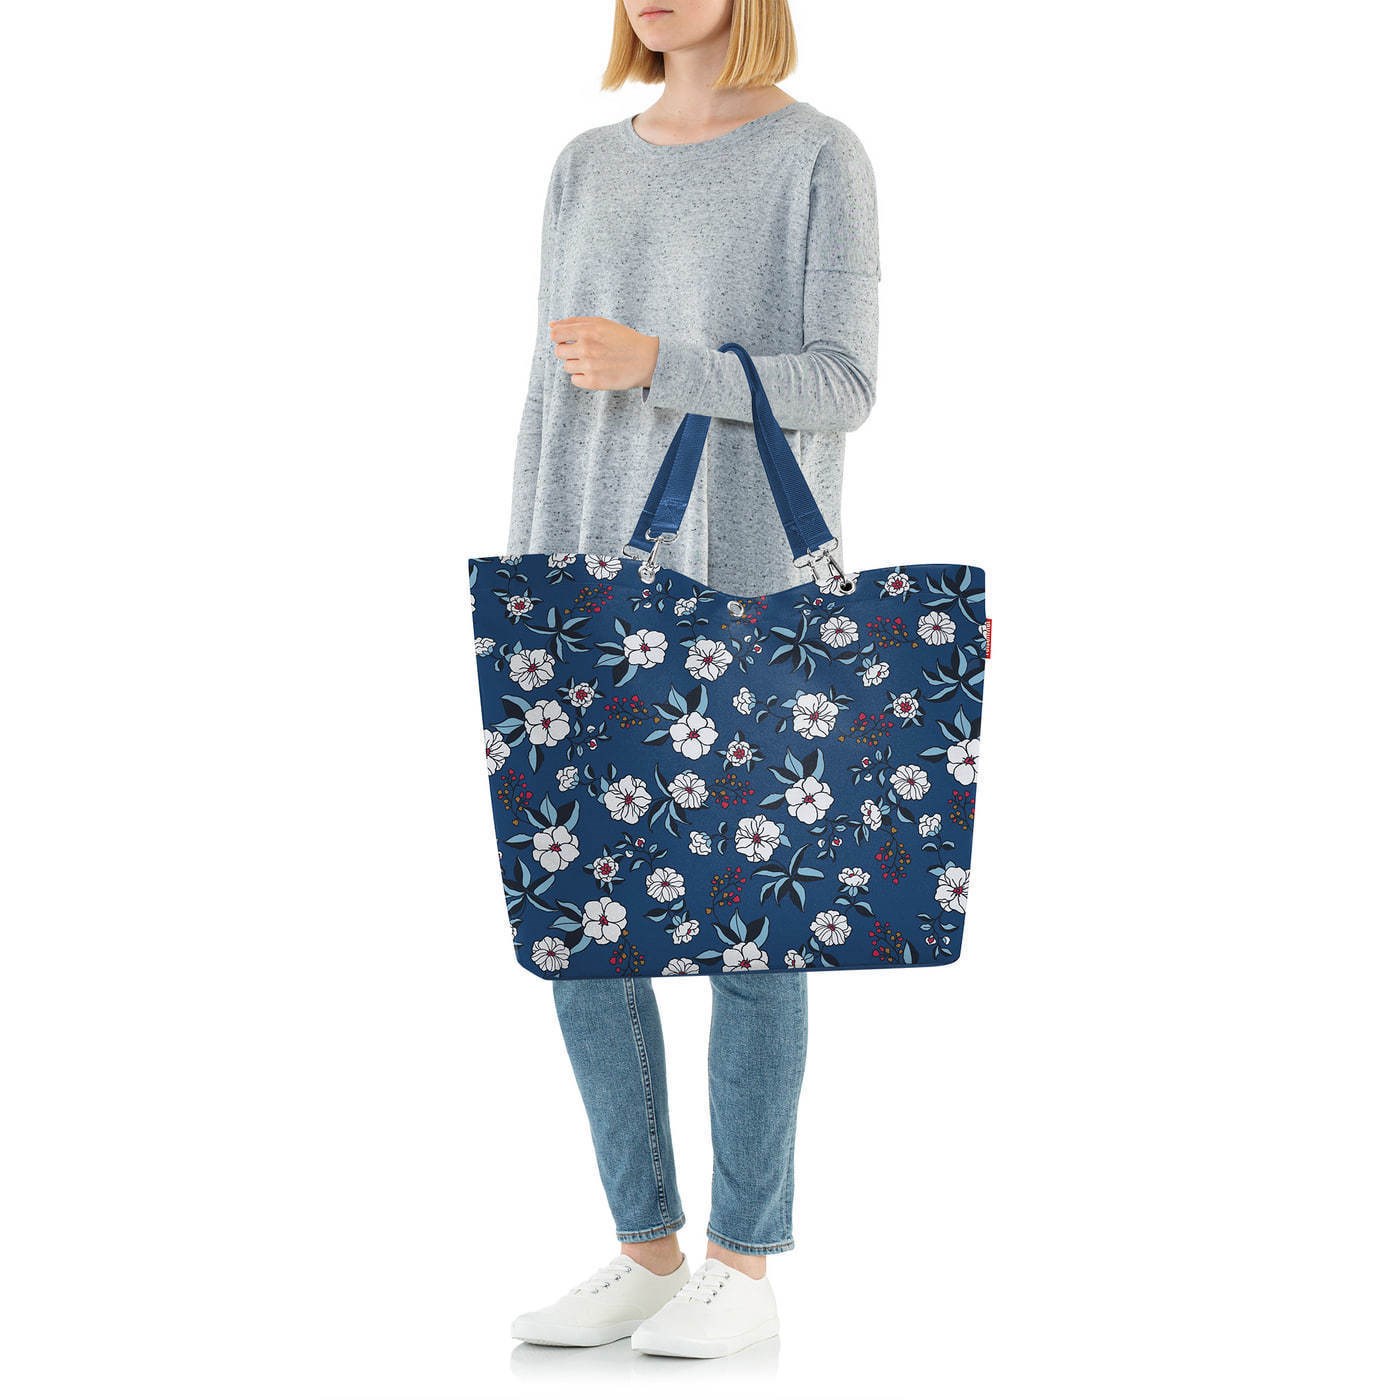 Taška přes rameno Shopper XL garden blue_4